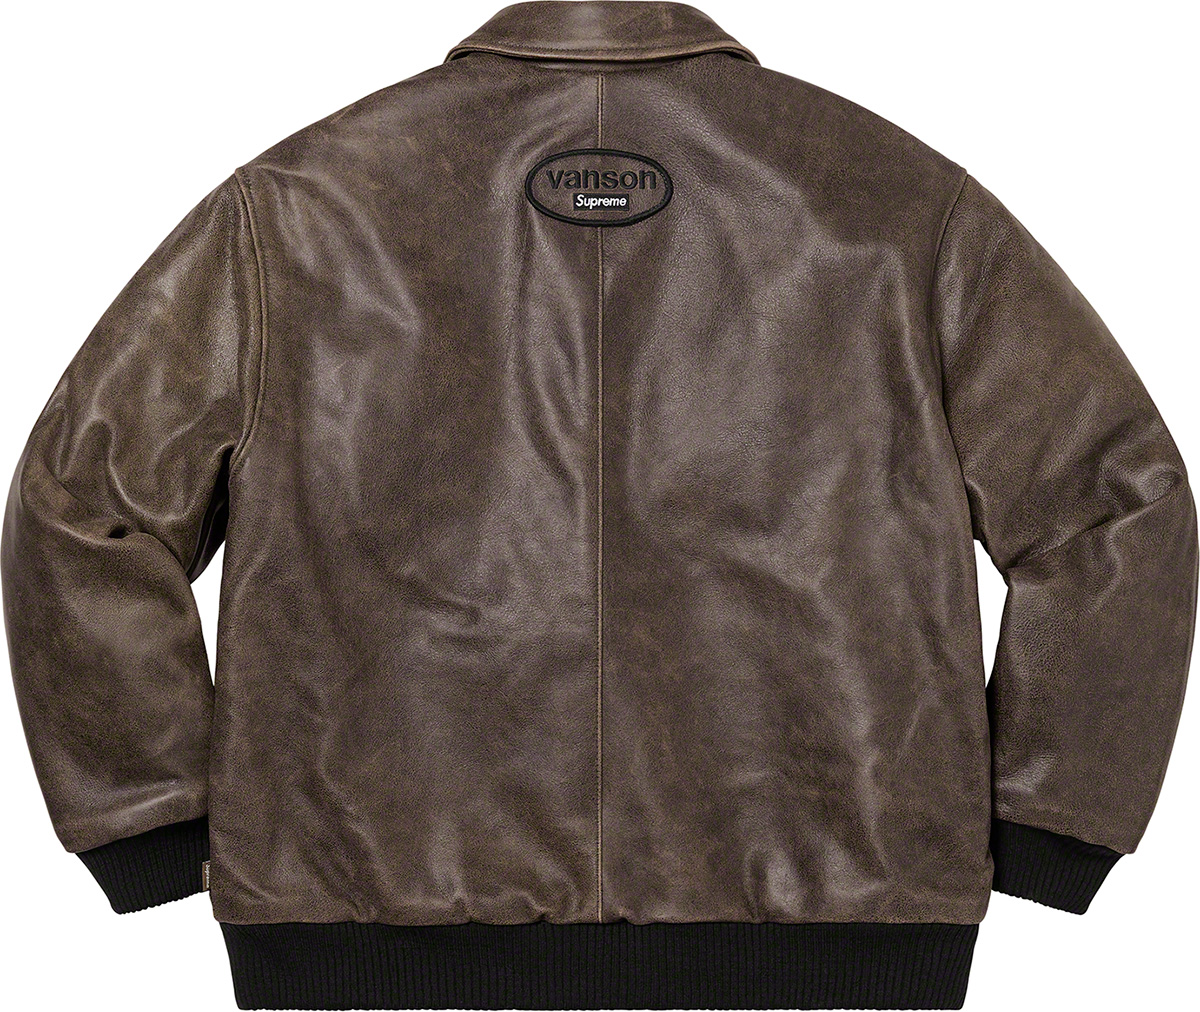 Vanson Leathers Worn Leather Jacket - fall winter 2020 - Supreme